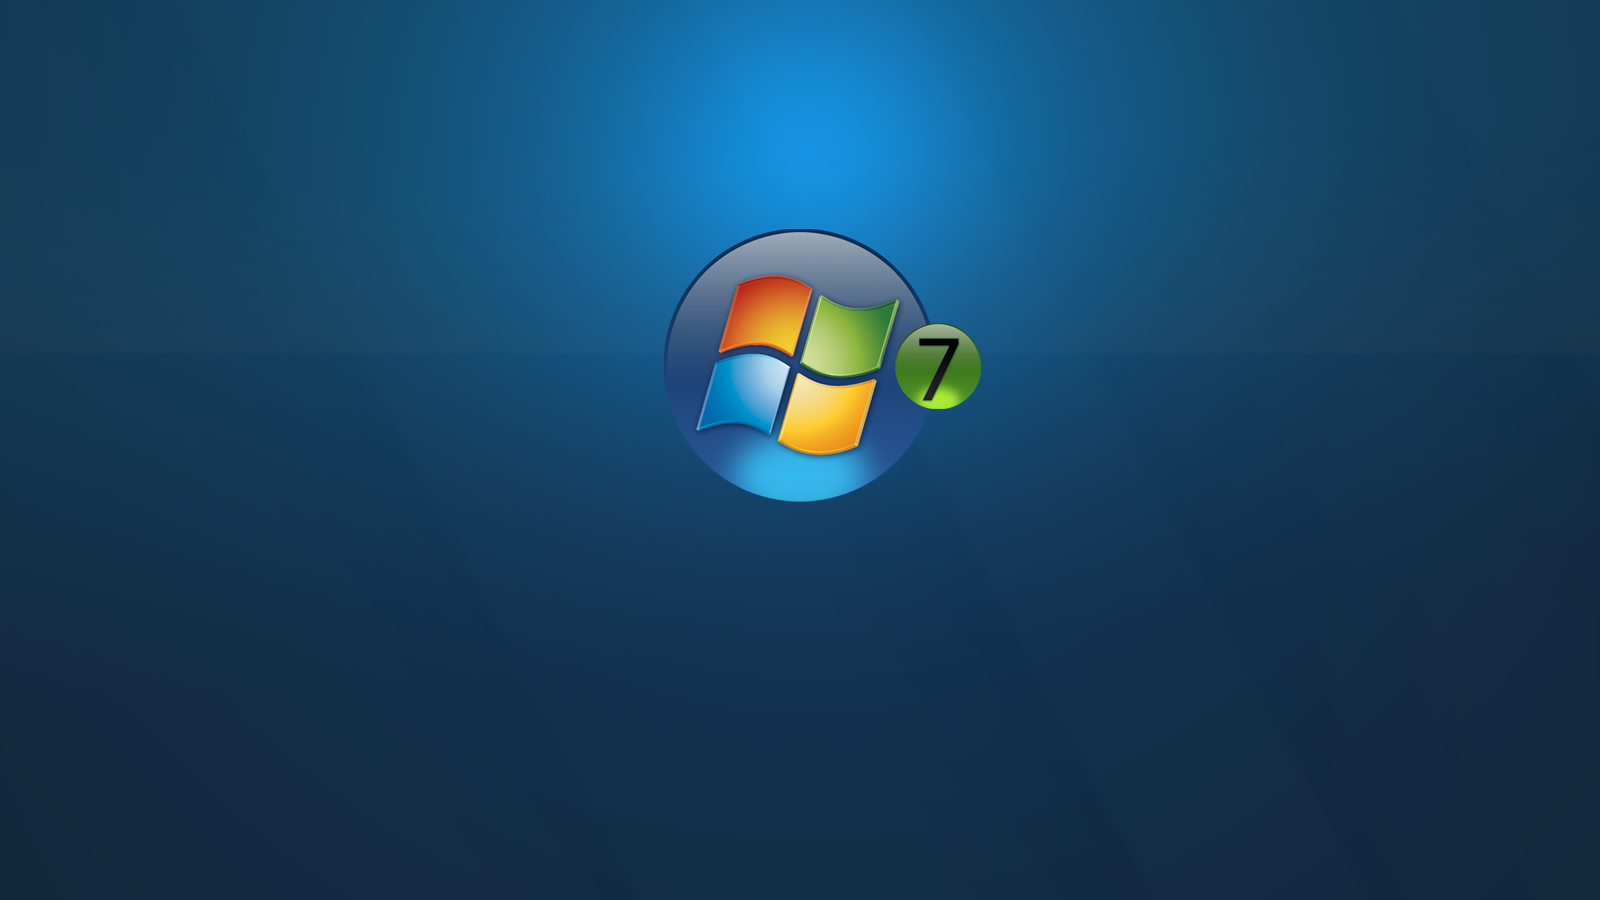 Windows 7 Wallpaper HD 1600x900 - WallpaperSafari